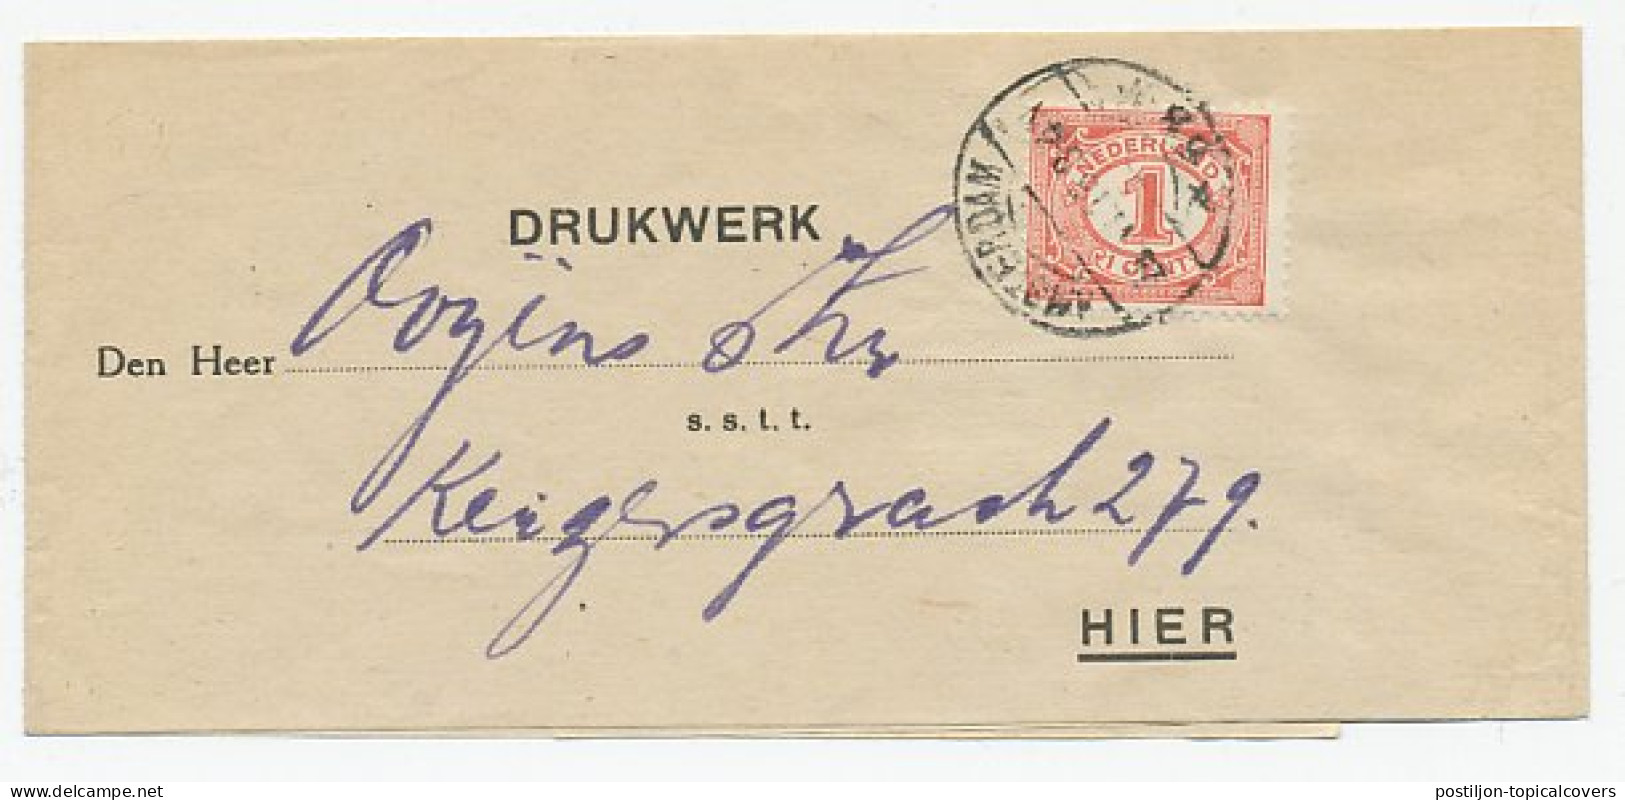 Em. 1899 Locaal Te Amsterdam - Drukwerk Wikkel - Unclassified